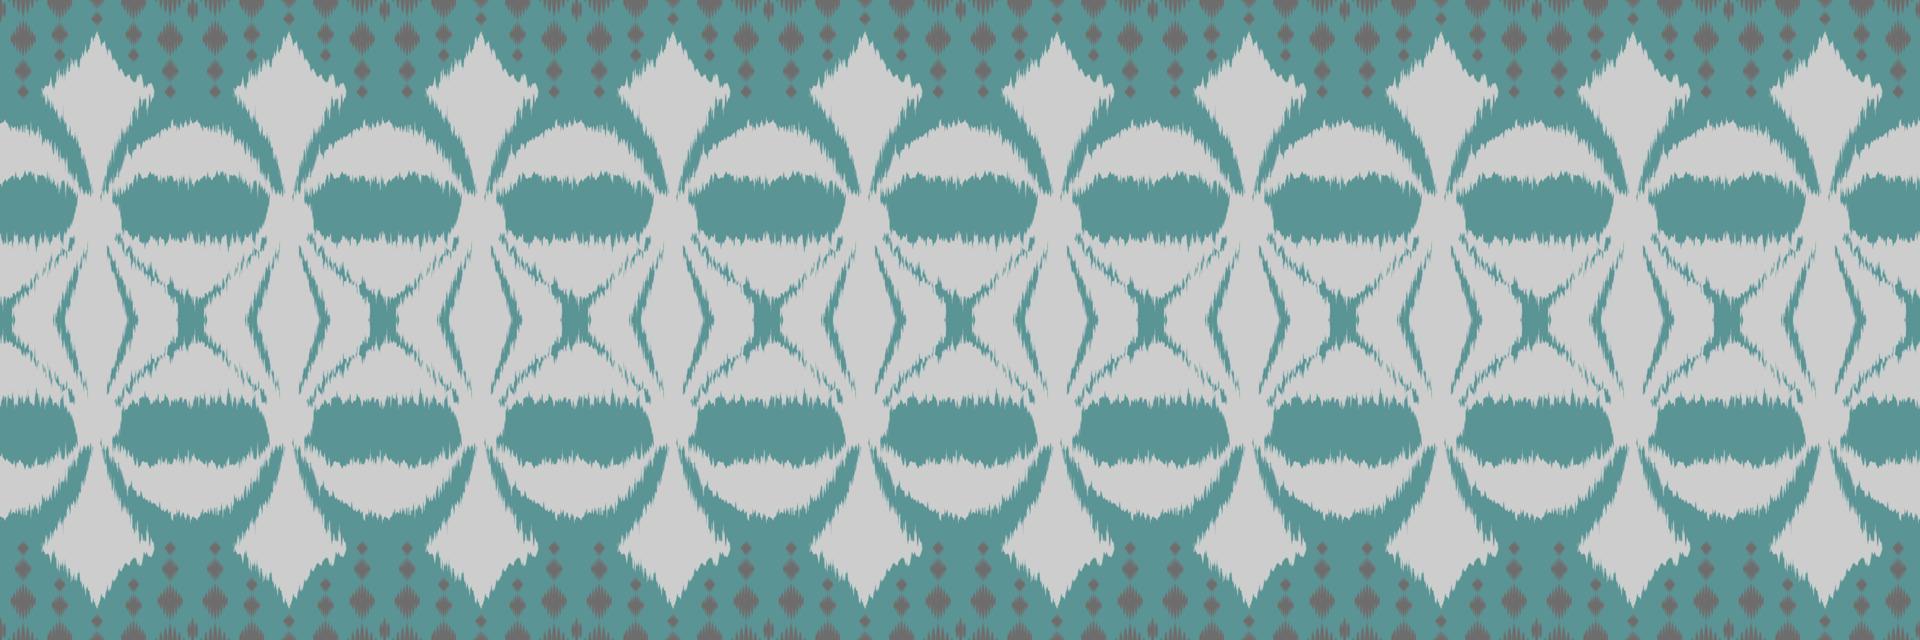 ikat floral tribal azteca de patrones sin fisuras. étnico geométrico ikkat batik vector digital diseño textil para estampados tela sari mughal cepillo símbolo franjas textura kurti kurtis kurtas